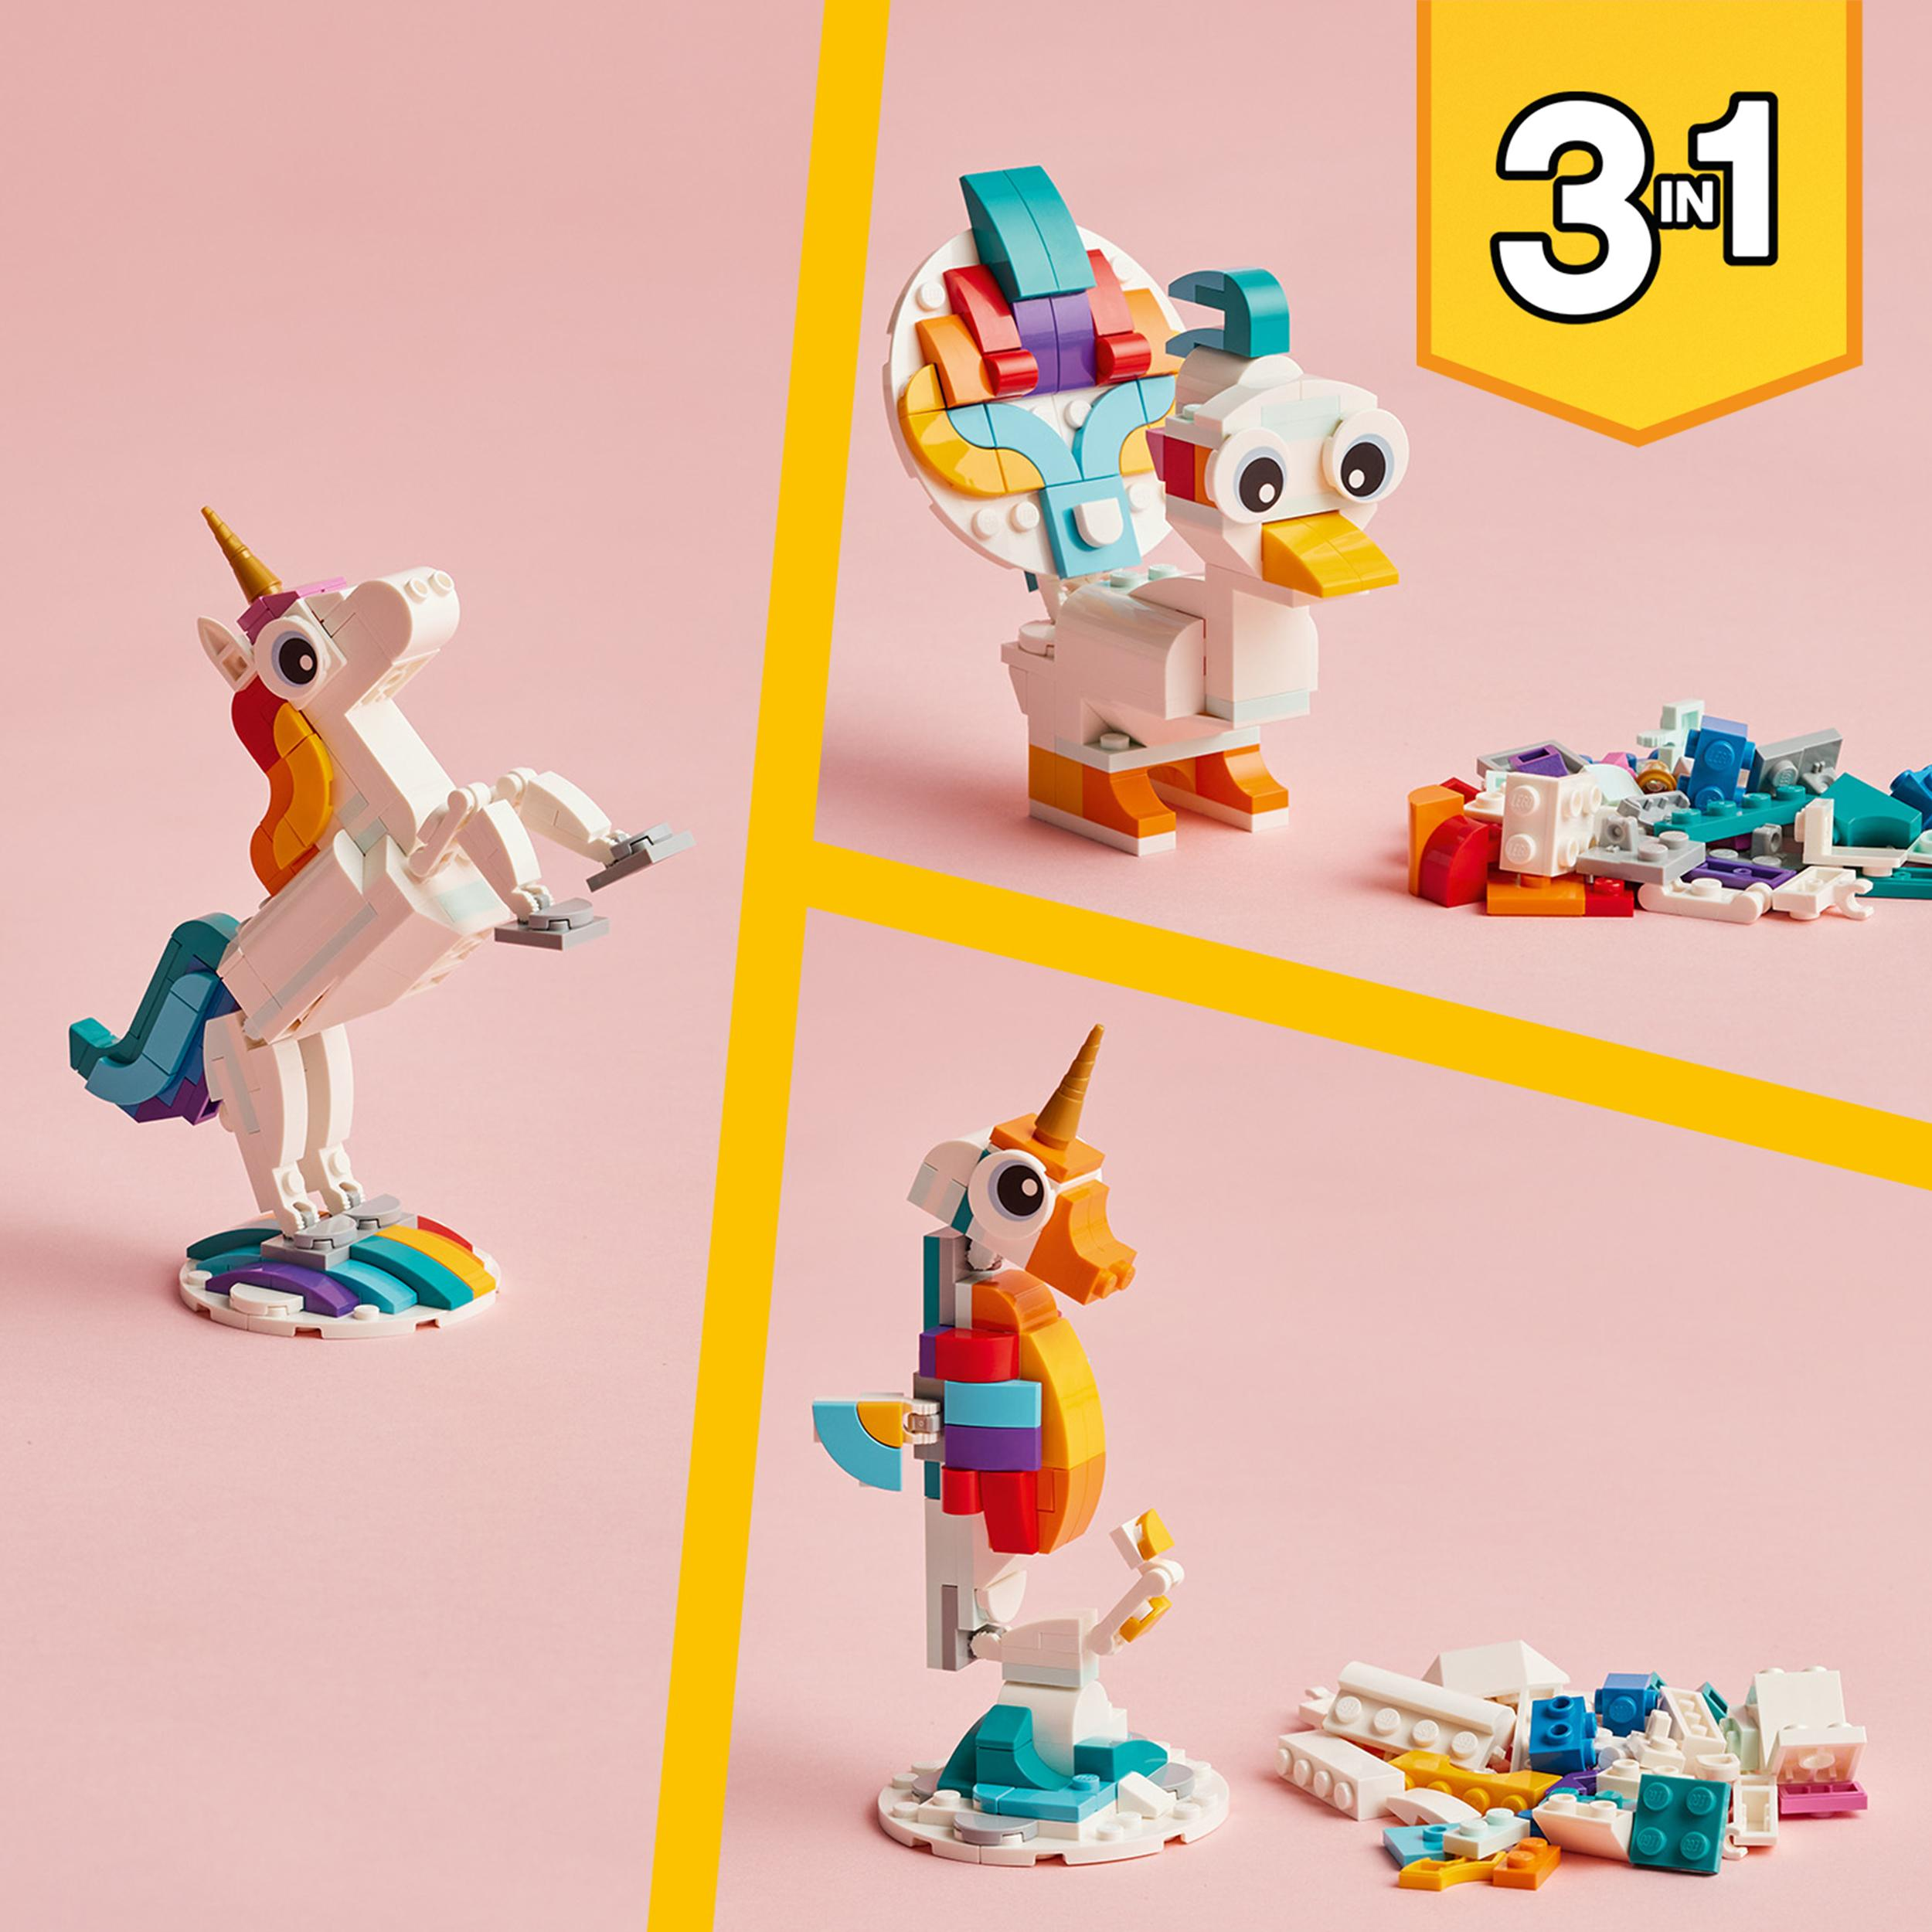 LEGO Creator 31140 Magisches Bausatz, Mehrfarbig Einhorn